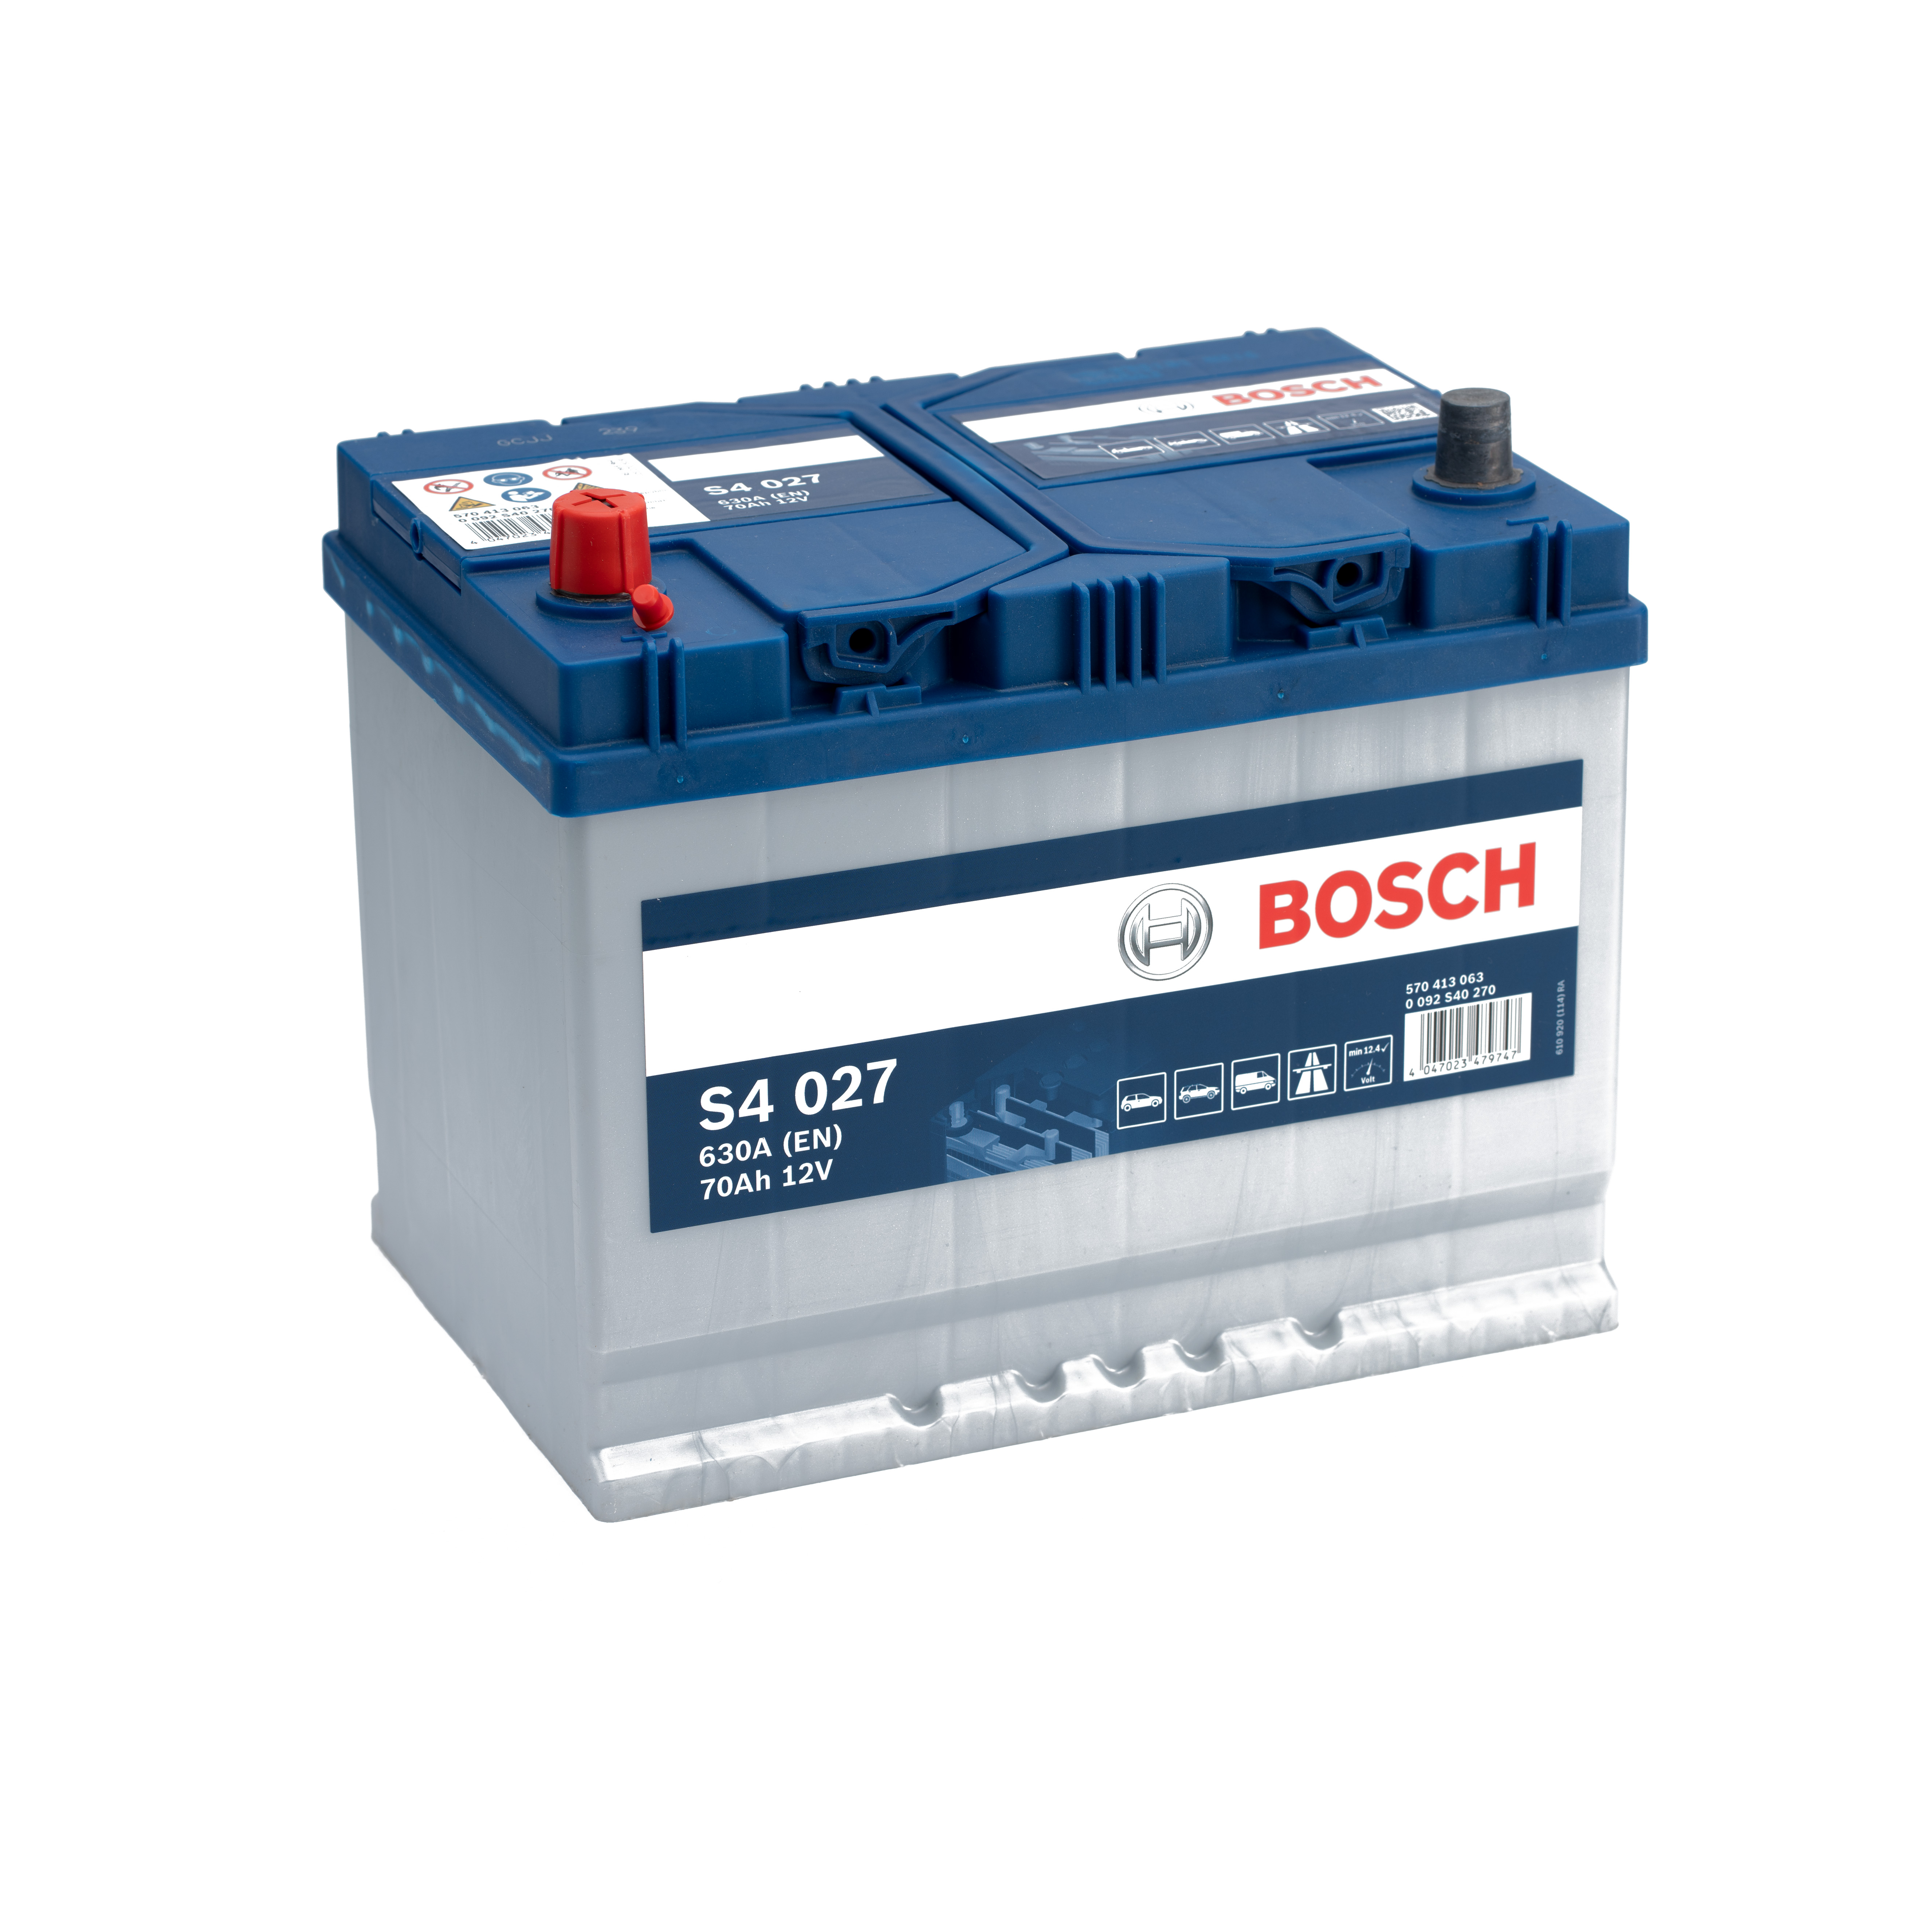 https://swissbatt24.ch/media/image/e7/6a/97/Bosch-S4-027-70Ah-Autobatterie-570413063.jpg